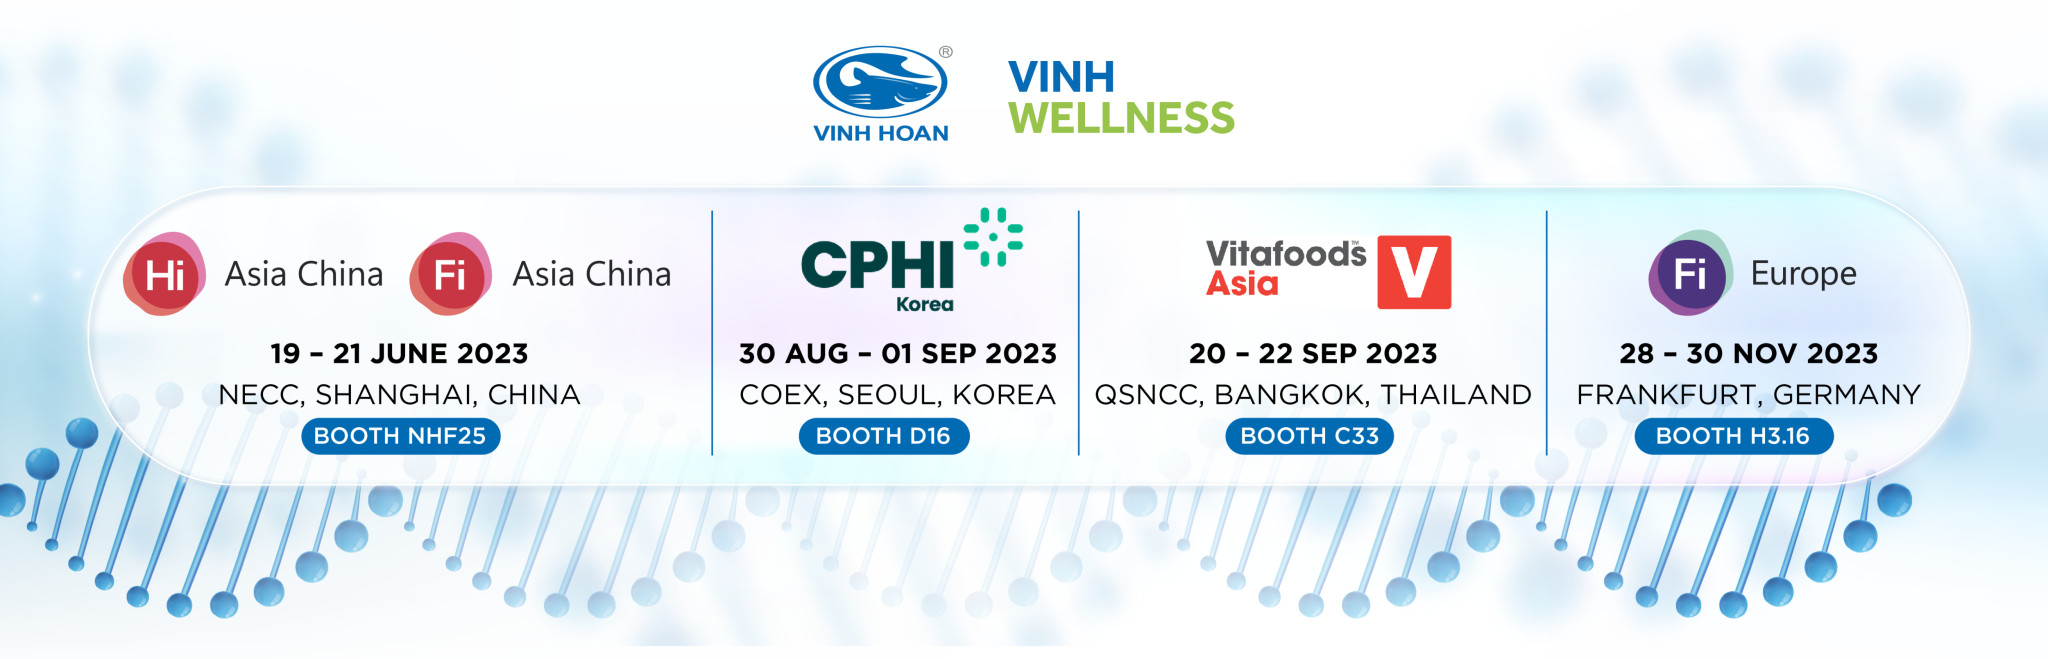 Mark Your 2023 Calendar for International Tradeshows with Vinh Wellness!